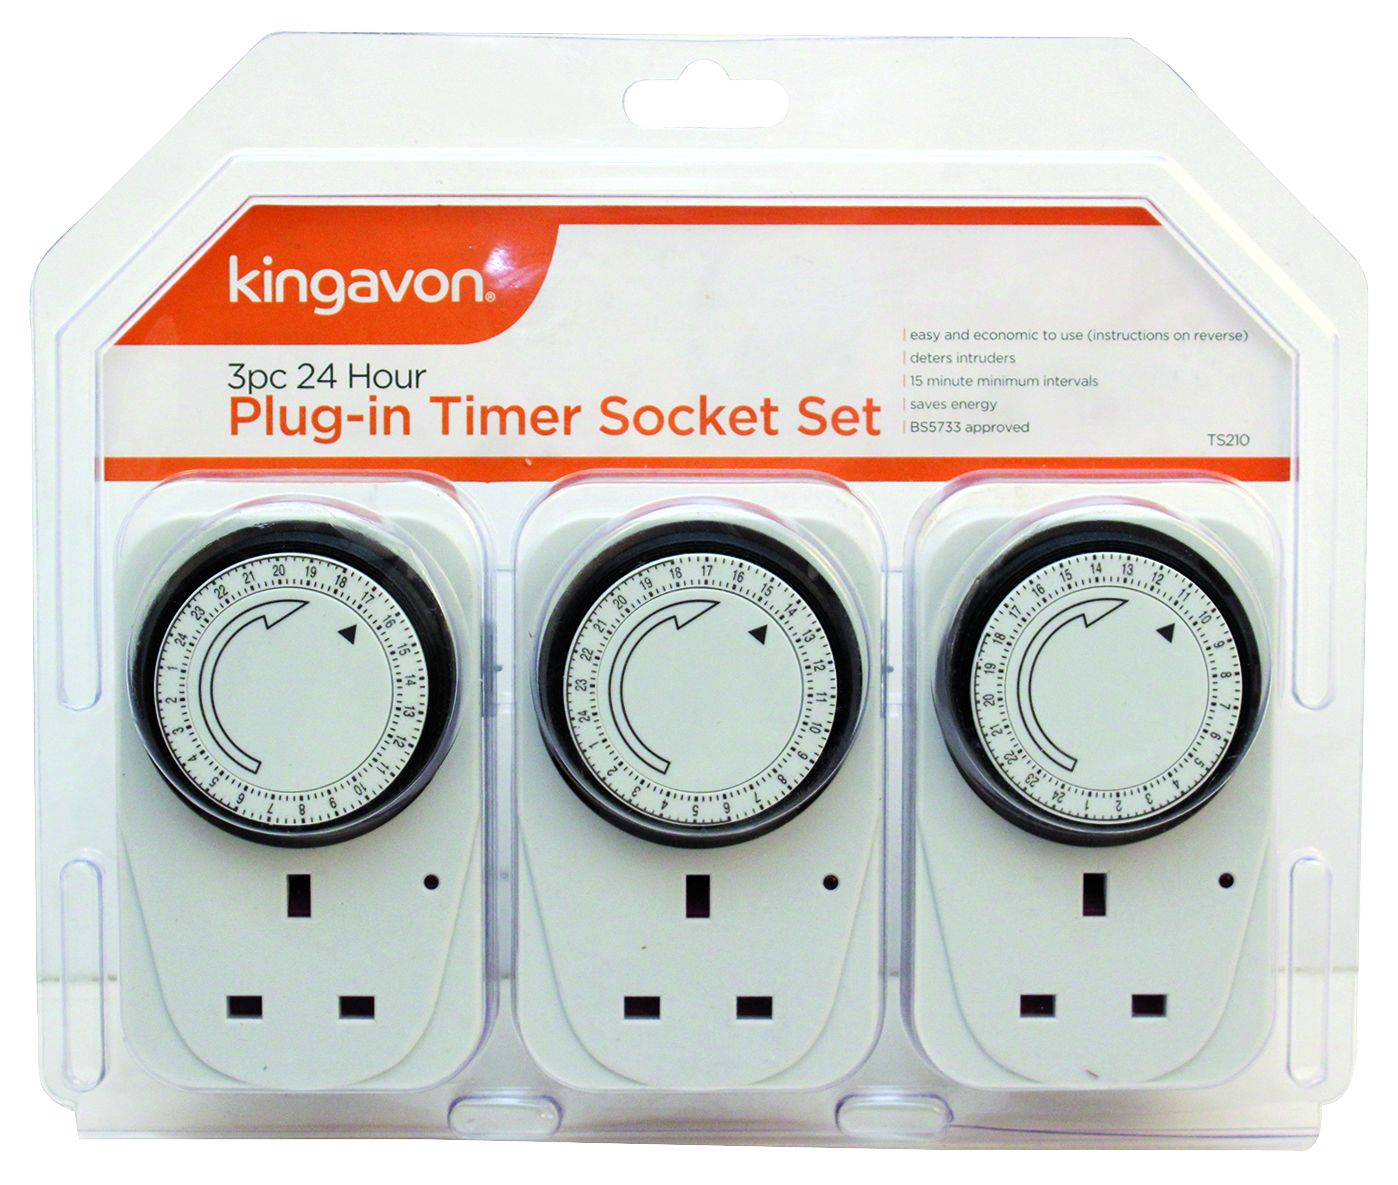 Kingavon 24 HR Plug In Timer Socket Set - 3 pieces